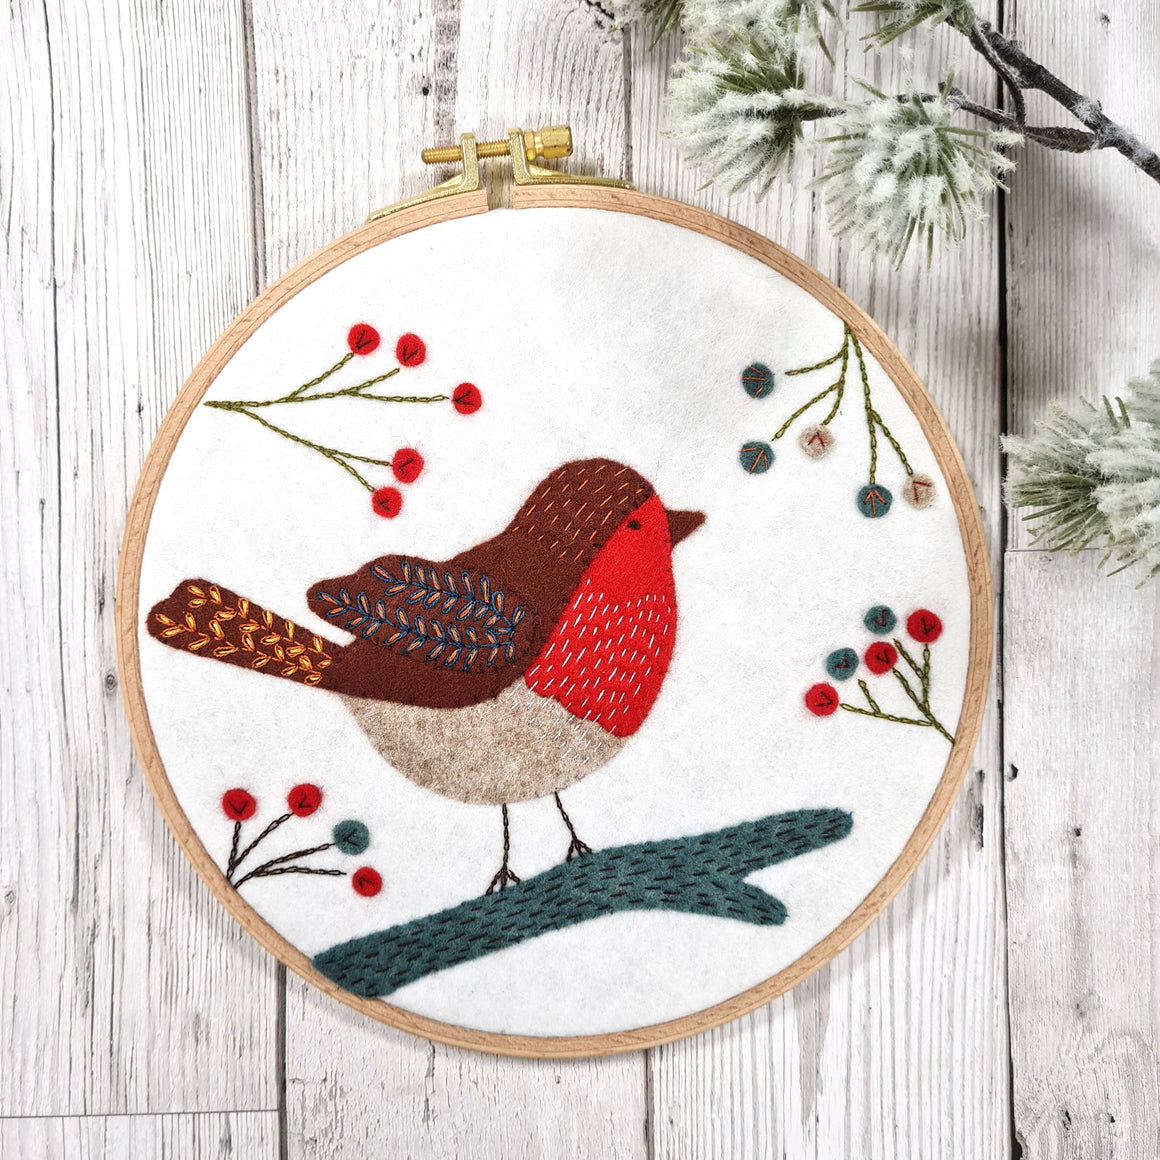 Corinne Lapierre applique hoop felt robin craft kit. Felt robin & berries, set in a wooden embroidery hoop.